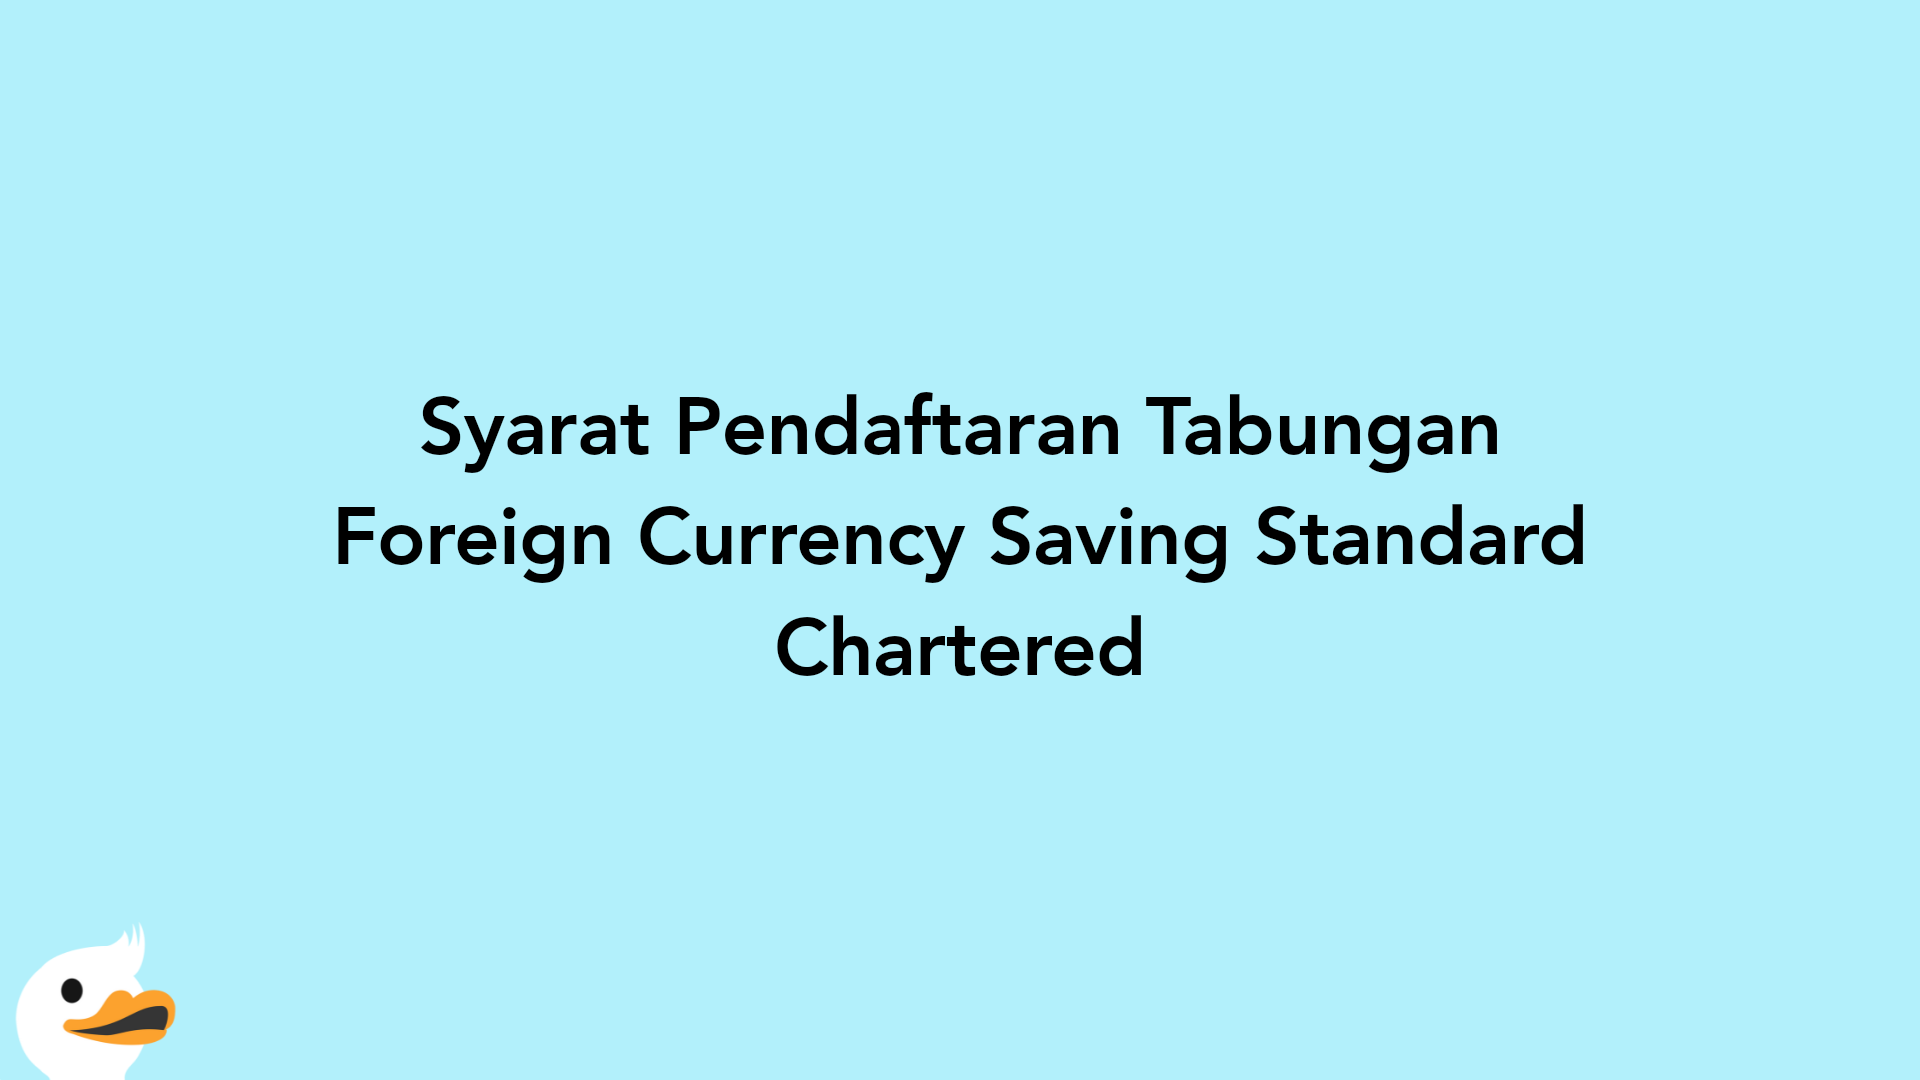 Syarat Pendaftaran Tabungan Foreign Currency Saving Standard Chartered